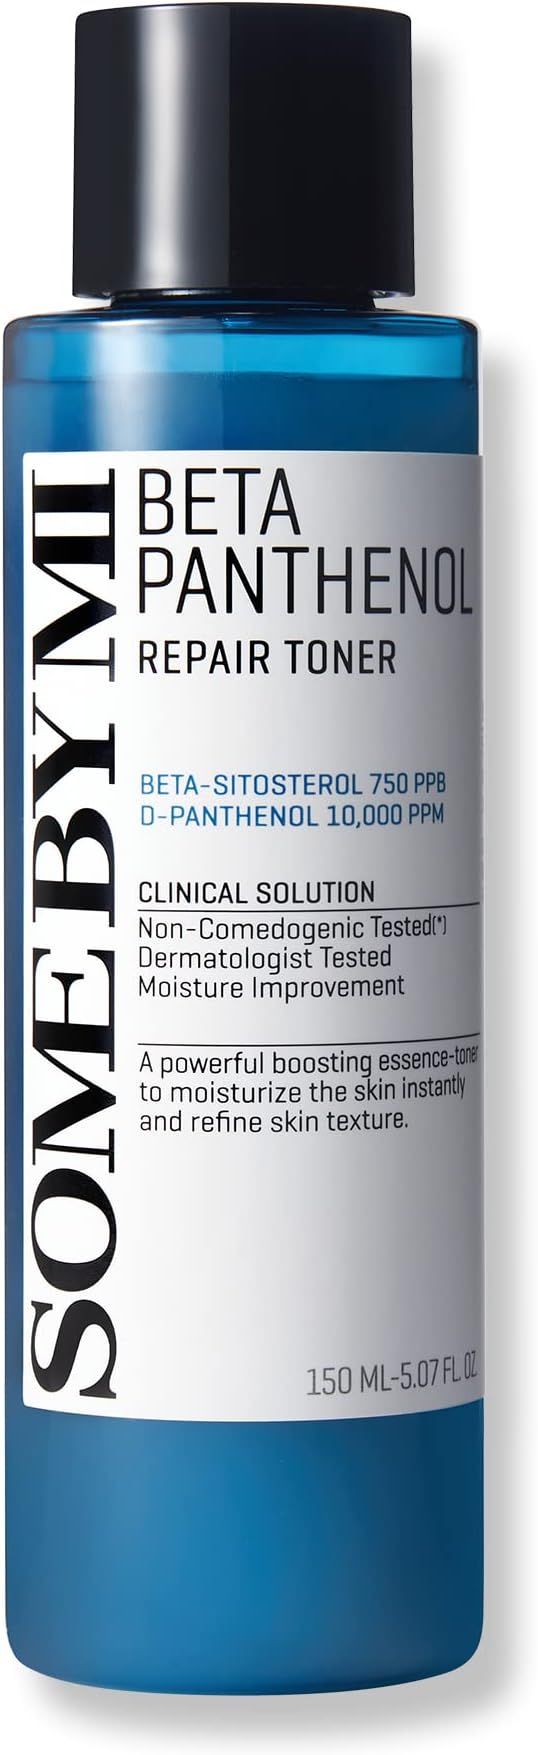 SOME BY MI Beta-Panthenol Repair Toner - 5.07Oz, 150ml – Rebuilding Skin Barrier with Beta-Sito... | Amazon (US)